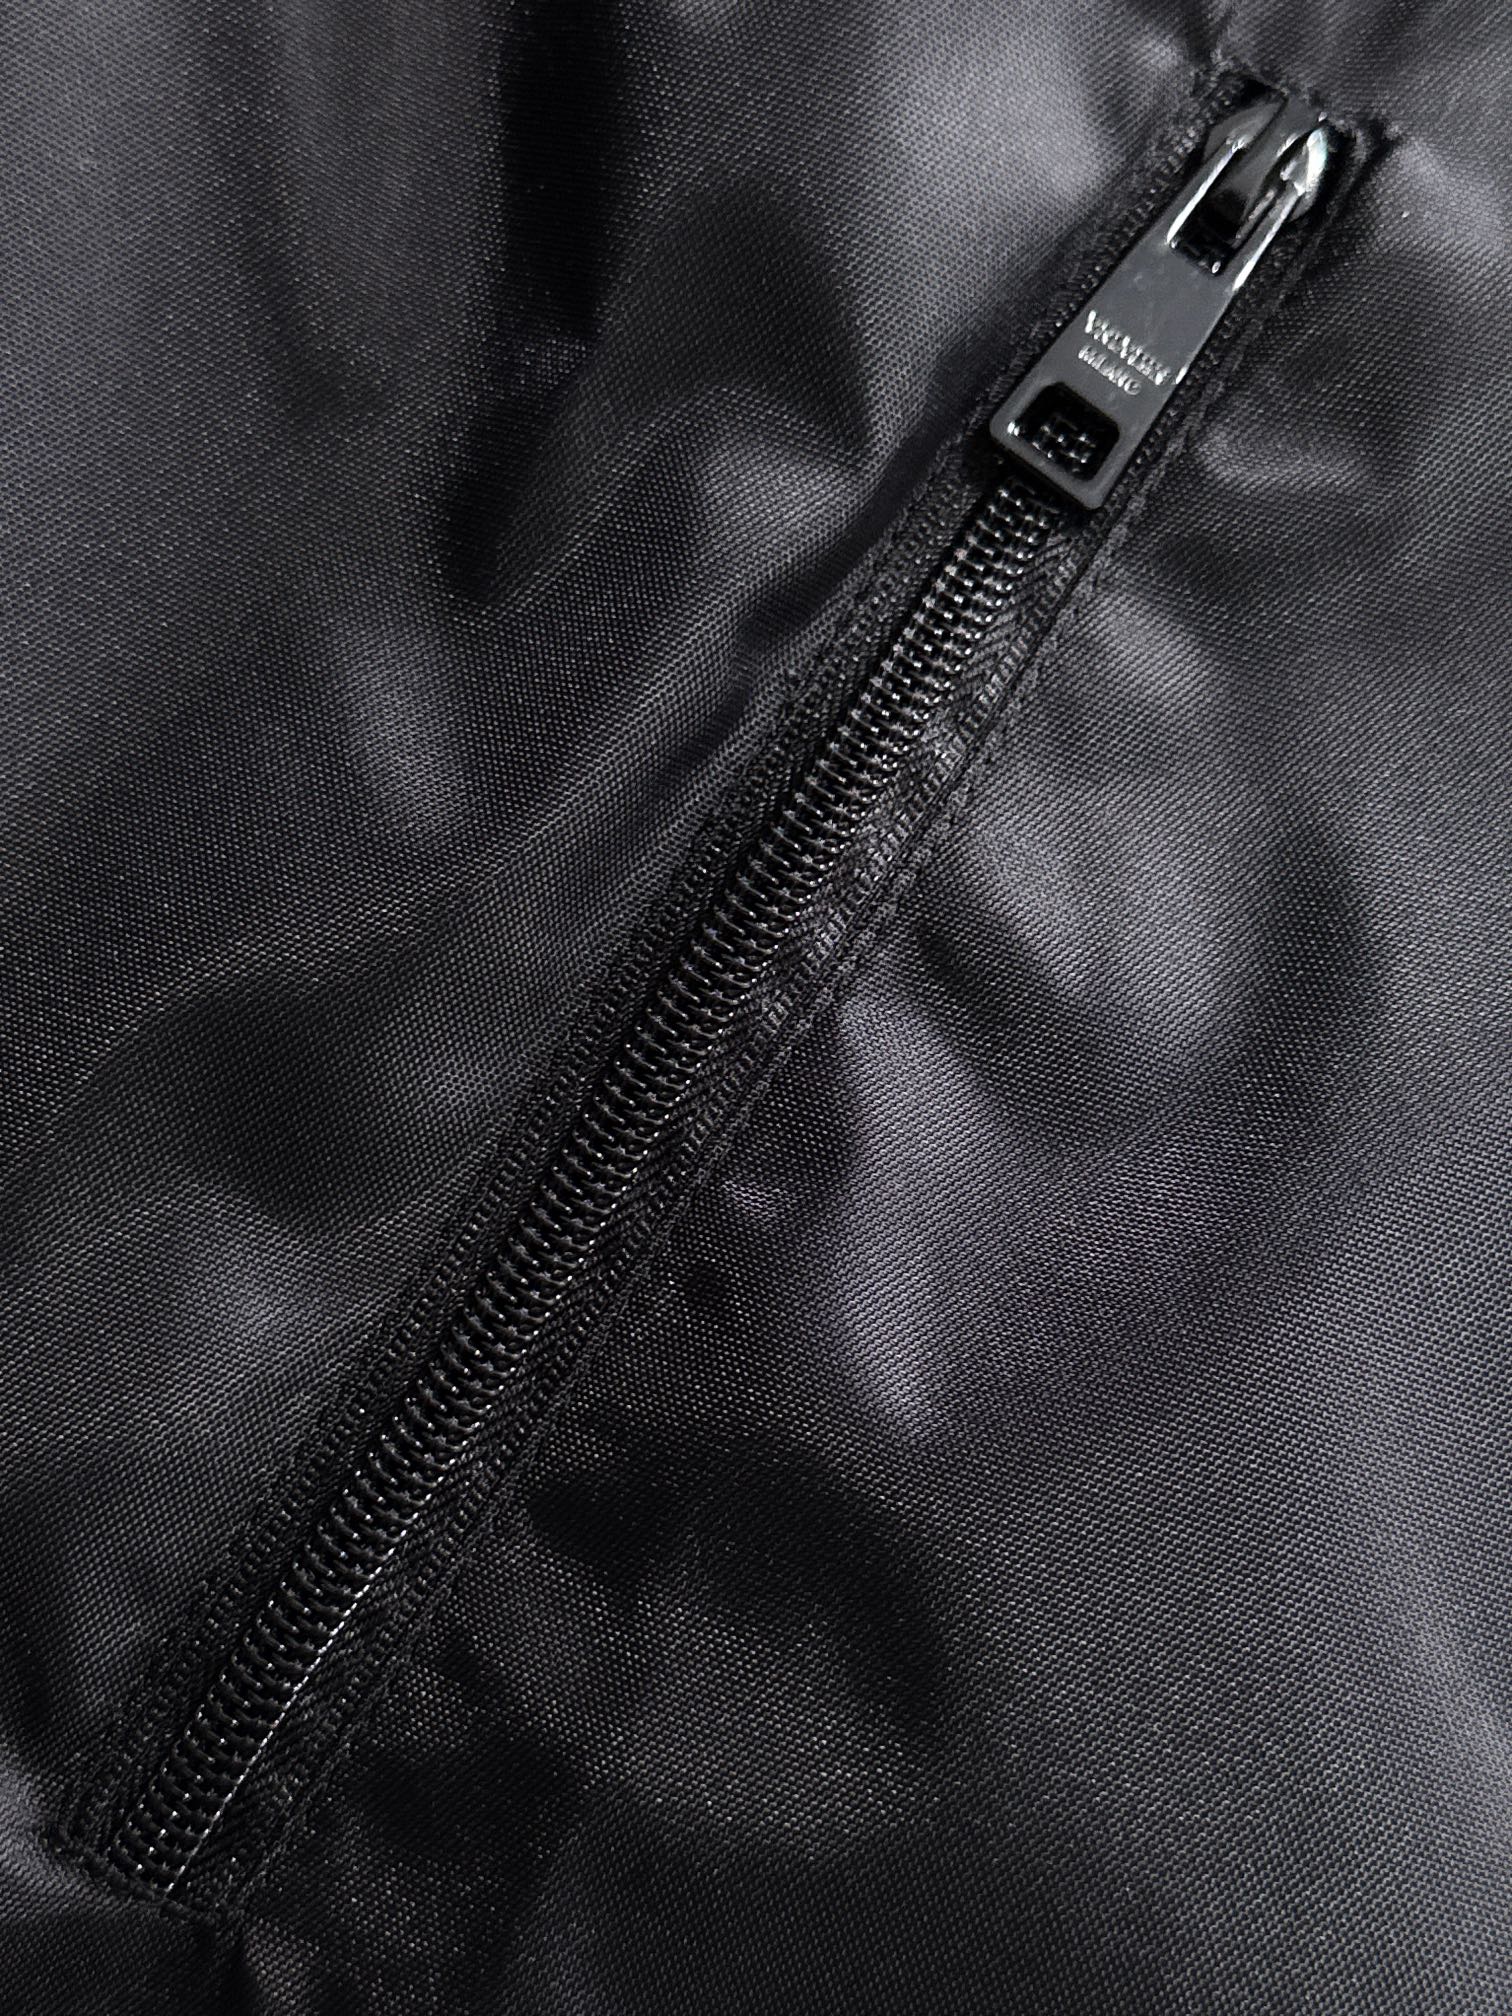 BAL2024年开春专柜爆款男士商务风衣高版本夹克原版1比1外套时尚都市款特供面料都是英国进口的超薄聚酯